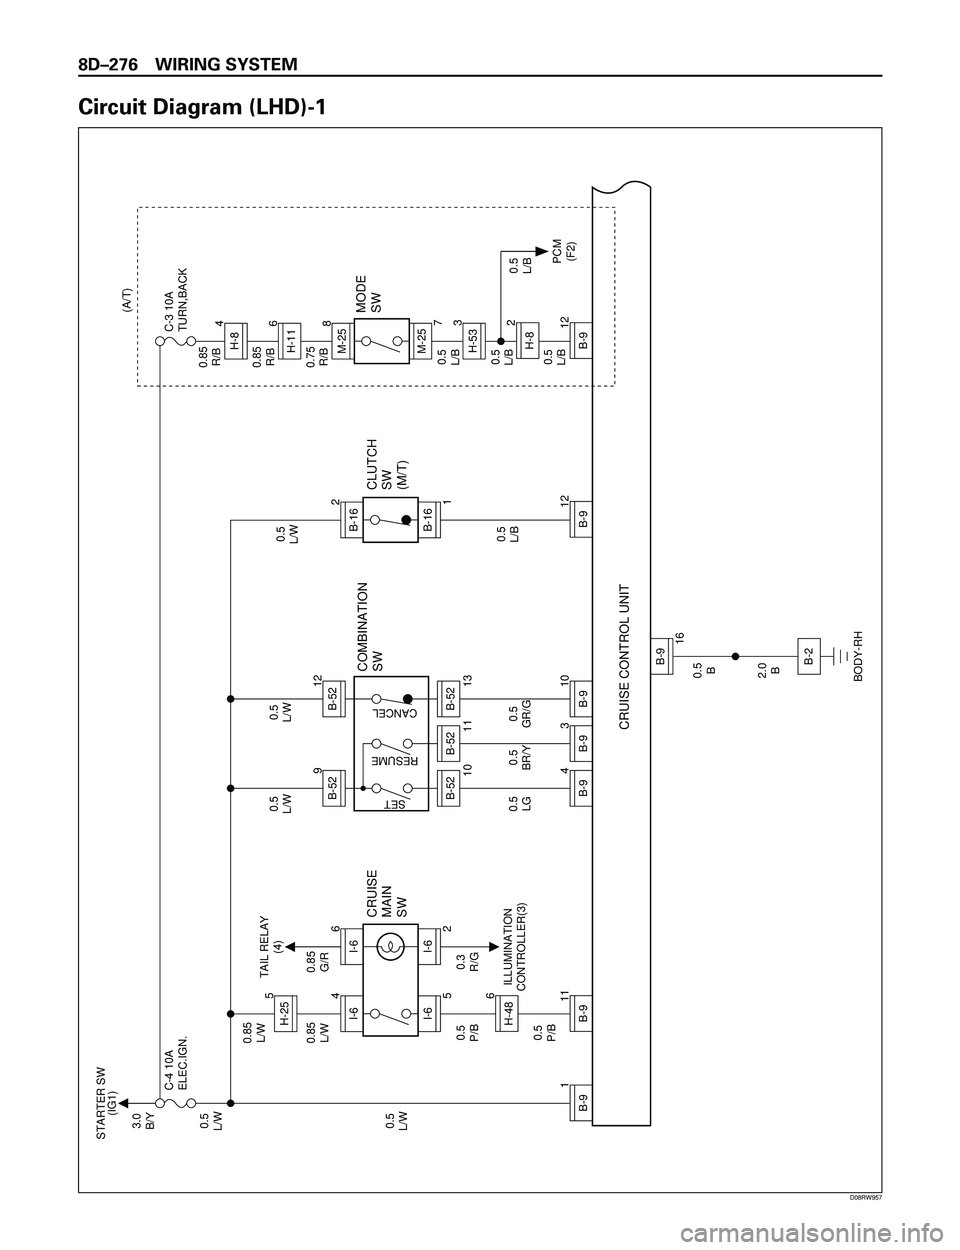 ISUZU TROOPER 1998  Service Owners Guide 8DÐ276 WIRING SYSTEM
Circuit Diagram (LHD)-1
5
I-6
11
6
H-48
0.5
L/W0.5
L/W0.5
L/W0.85
R/B
0.85
R/B
0.75
R/B
0.5
L/B
0.5
L/B
0.5
L/B
0.5
L/B(A/T)
0.5
L/B 0.5
LG0.5
BR/Y0.5
GR/G
0.5
B
2.0
B 3.0
B/Y
0.